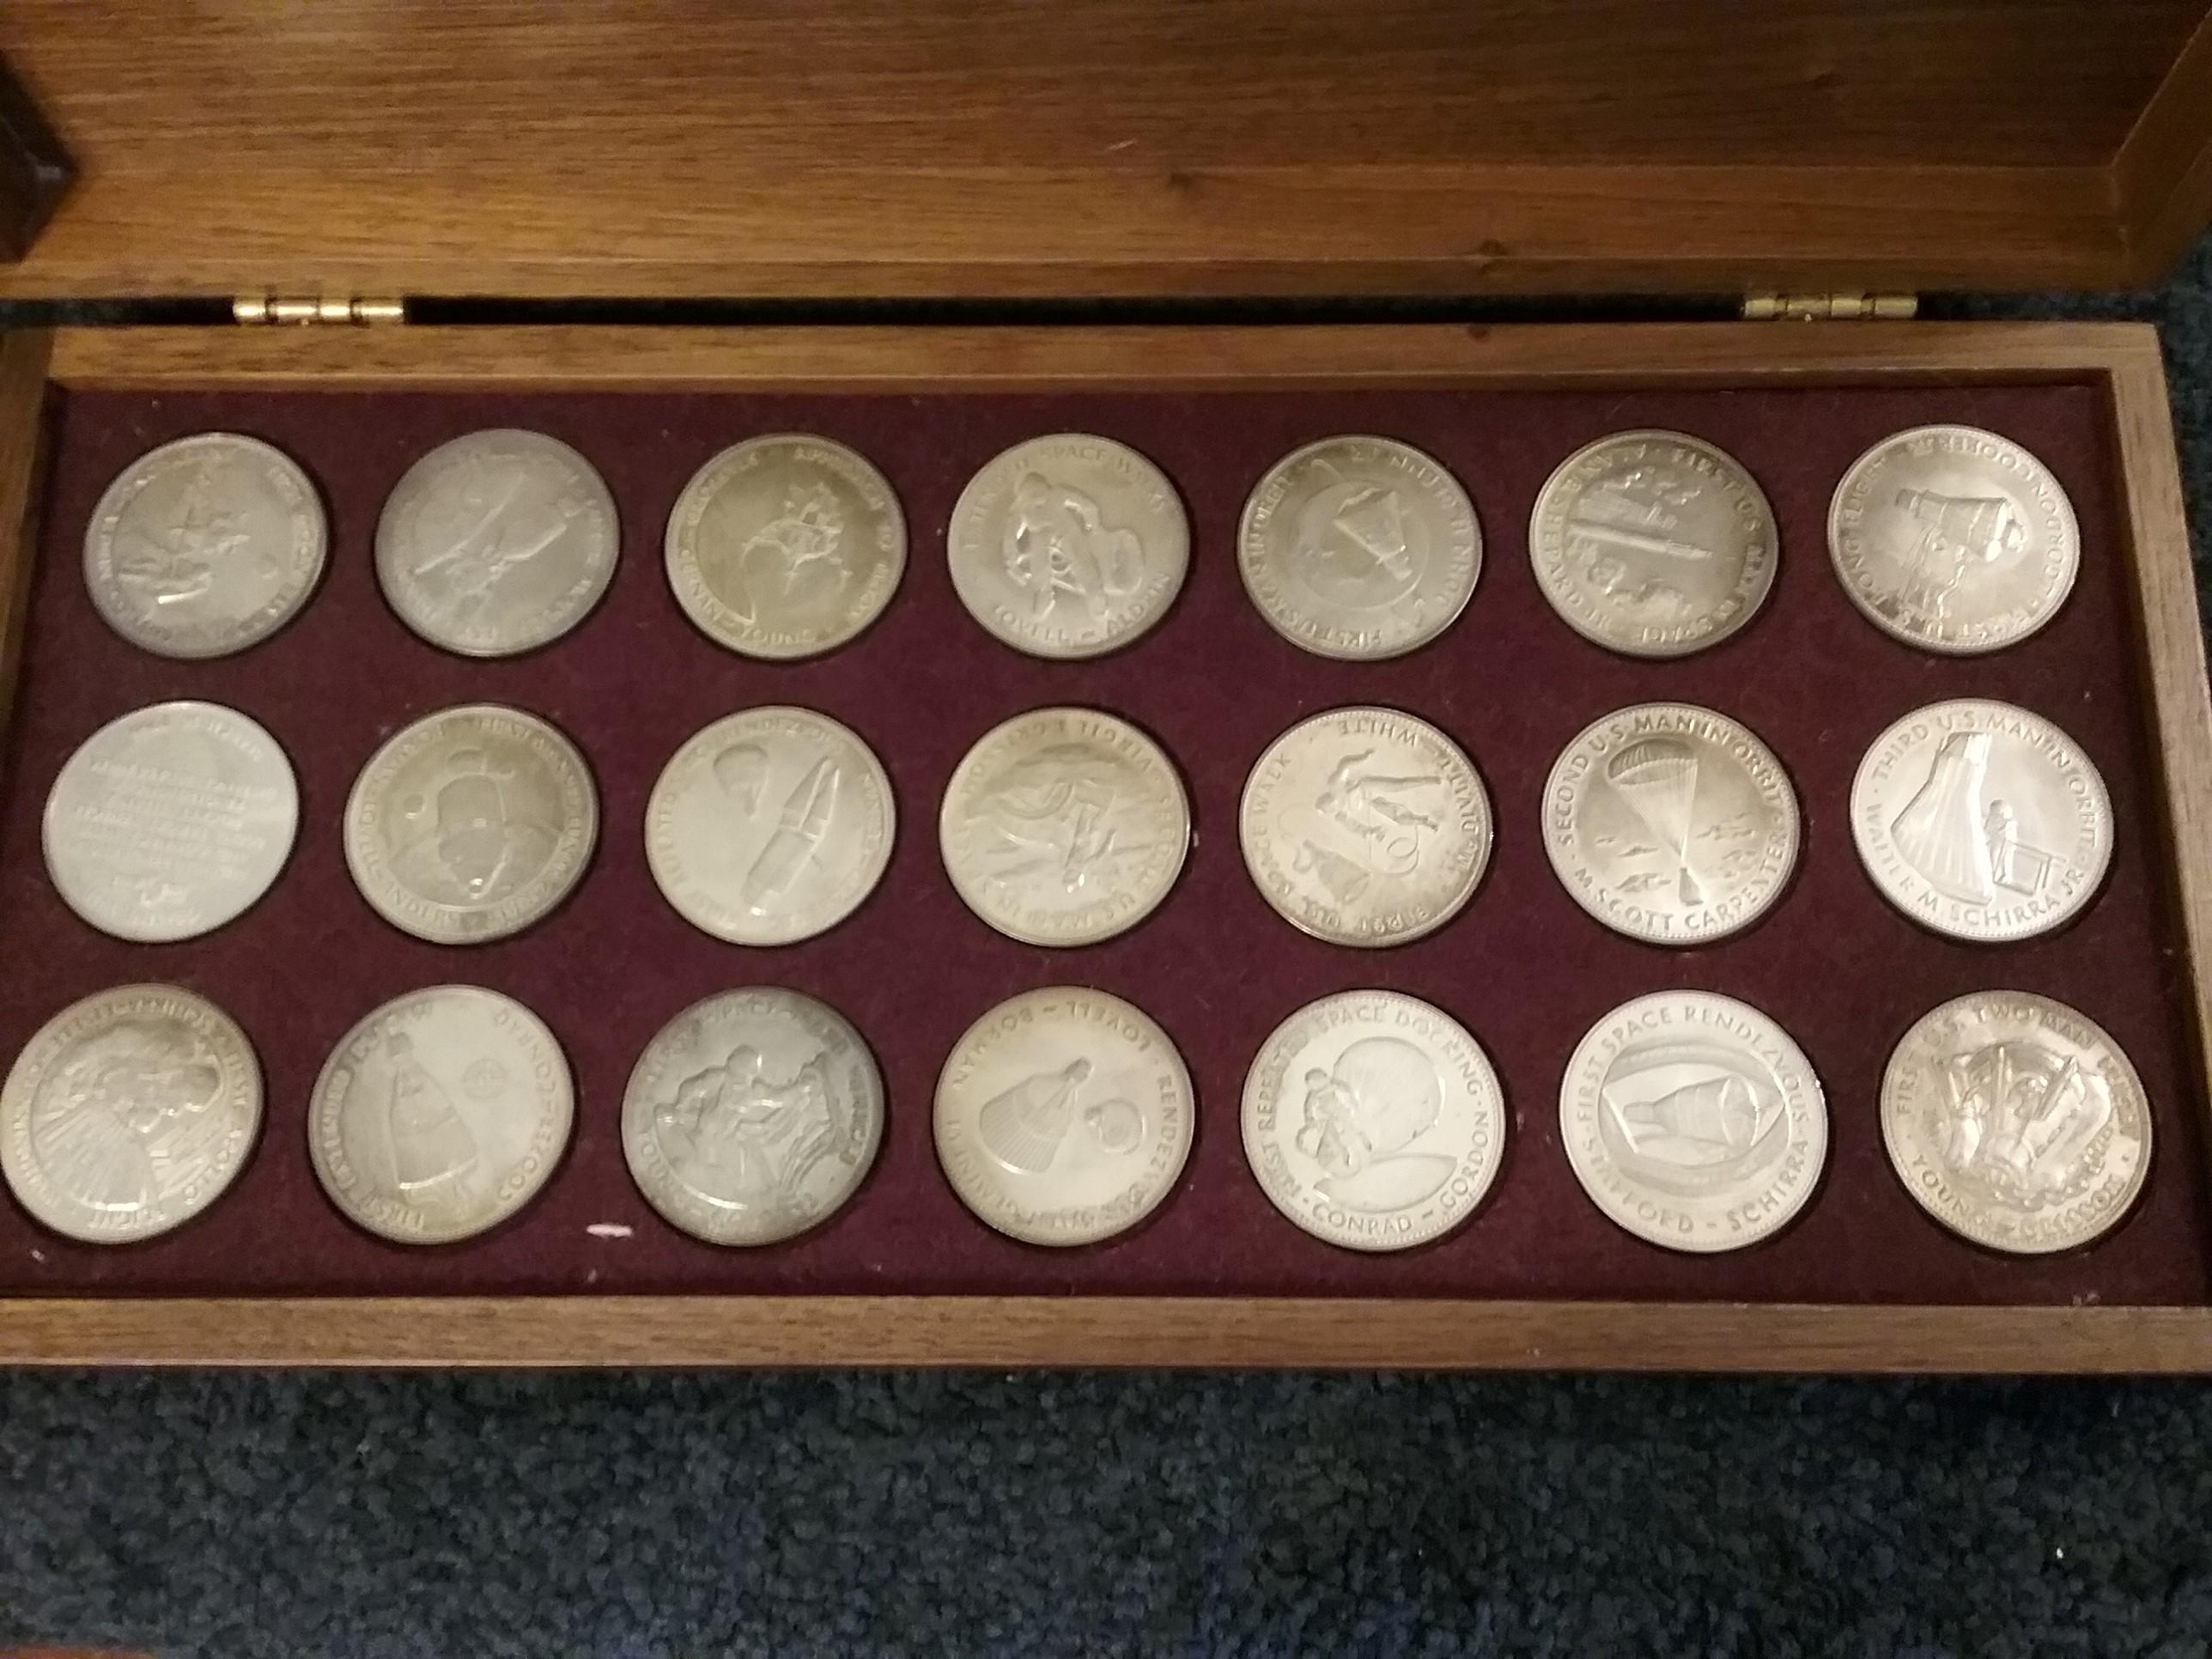 Danbury Mint Men in Space Series Silver Medals